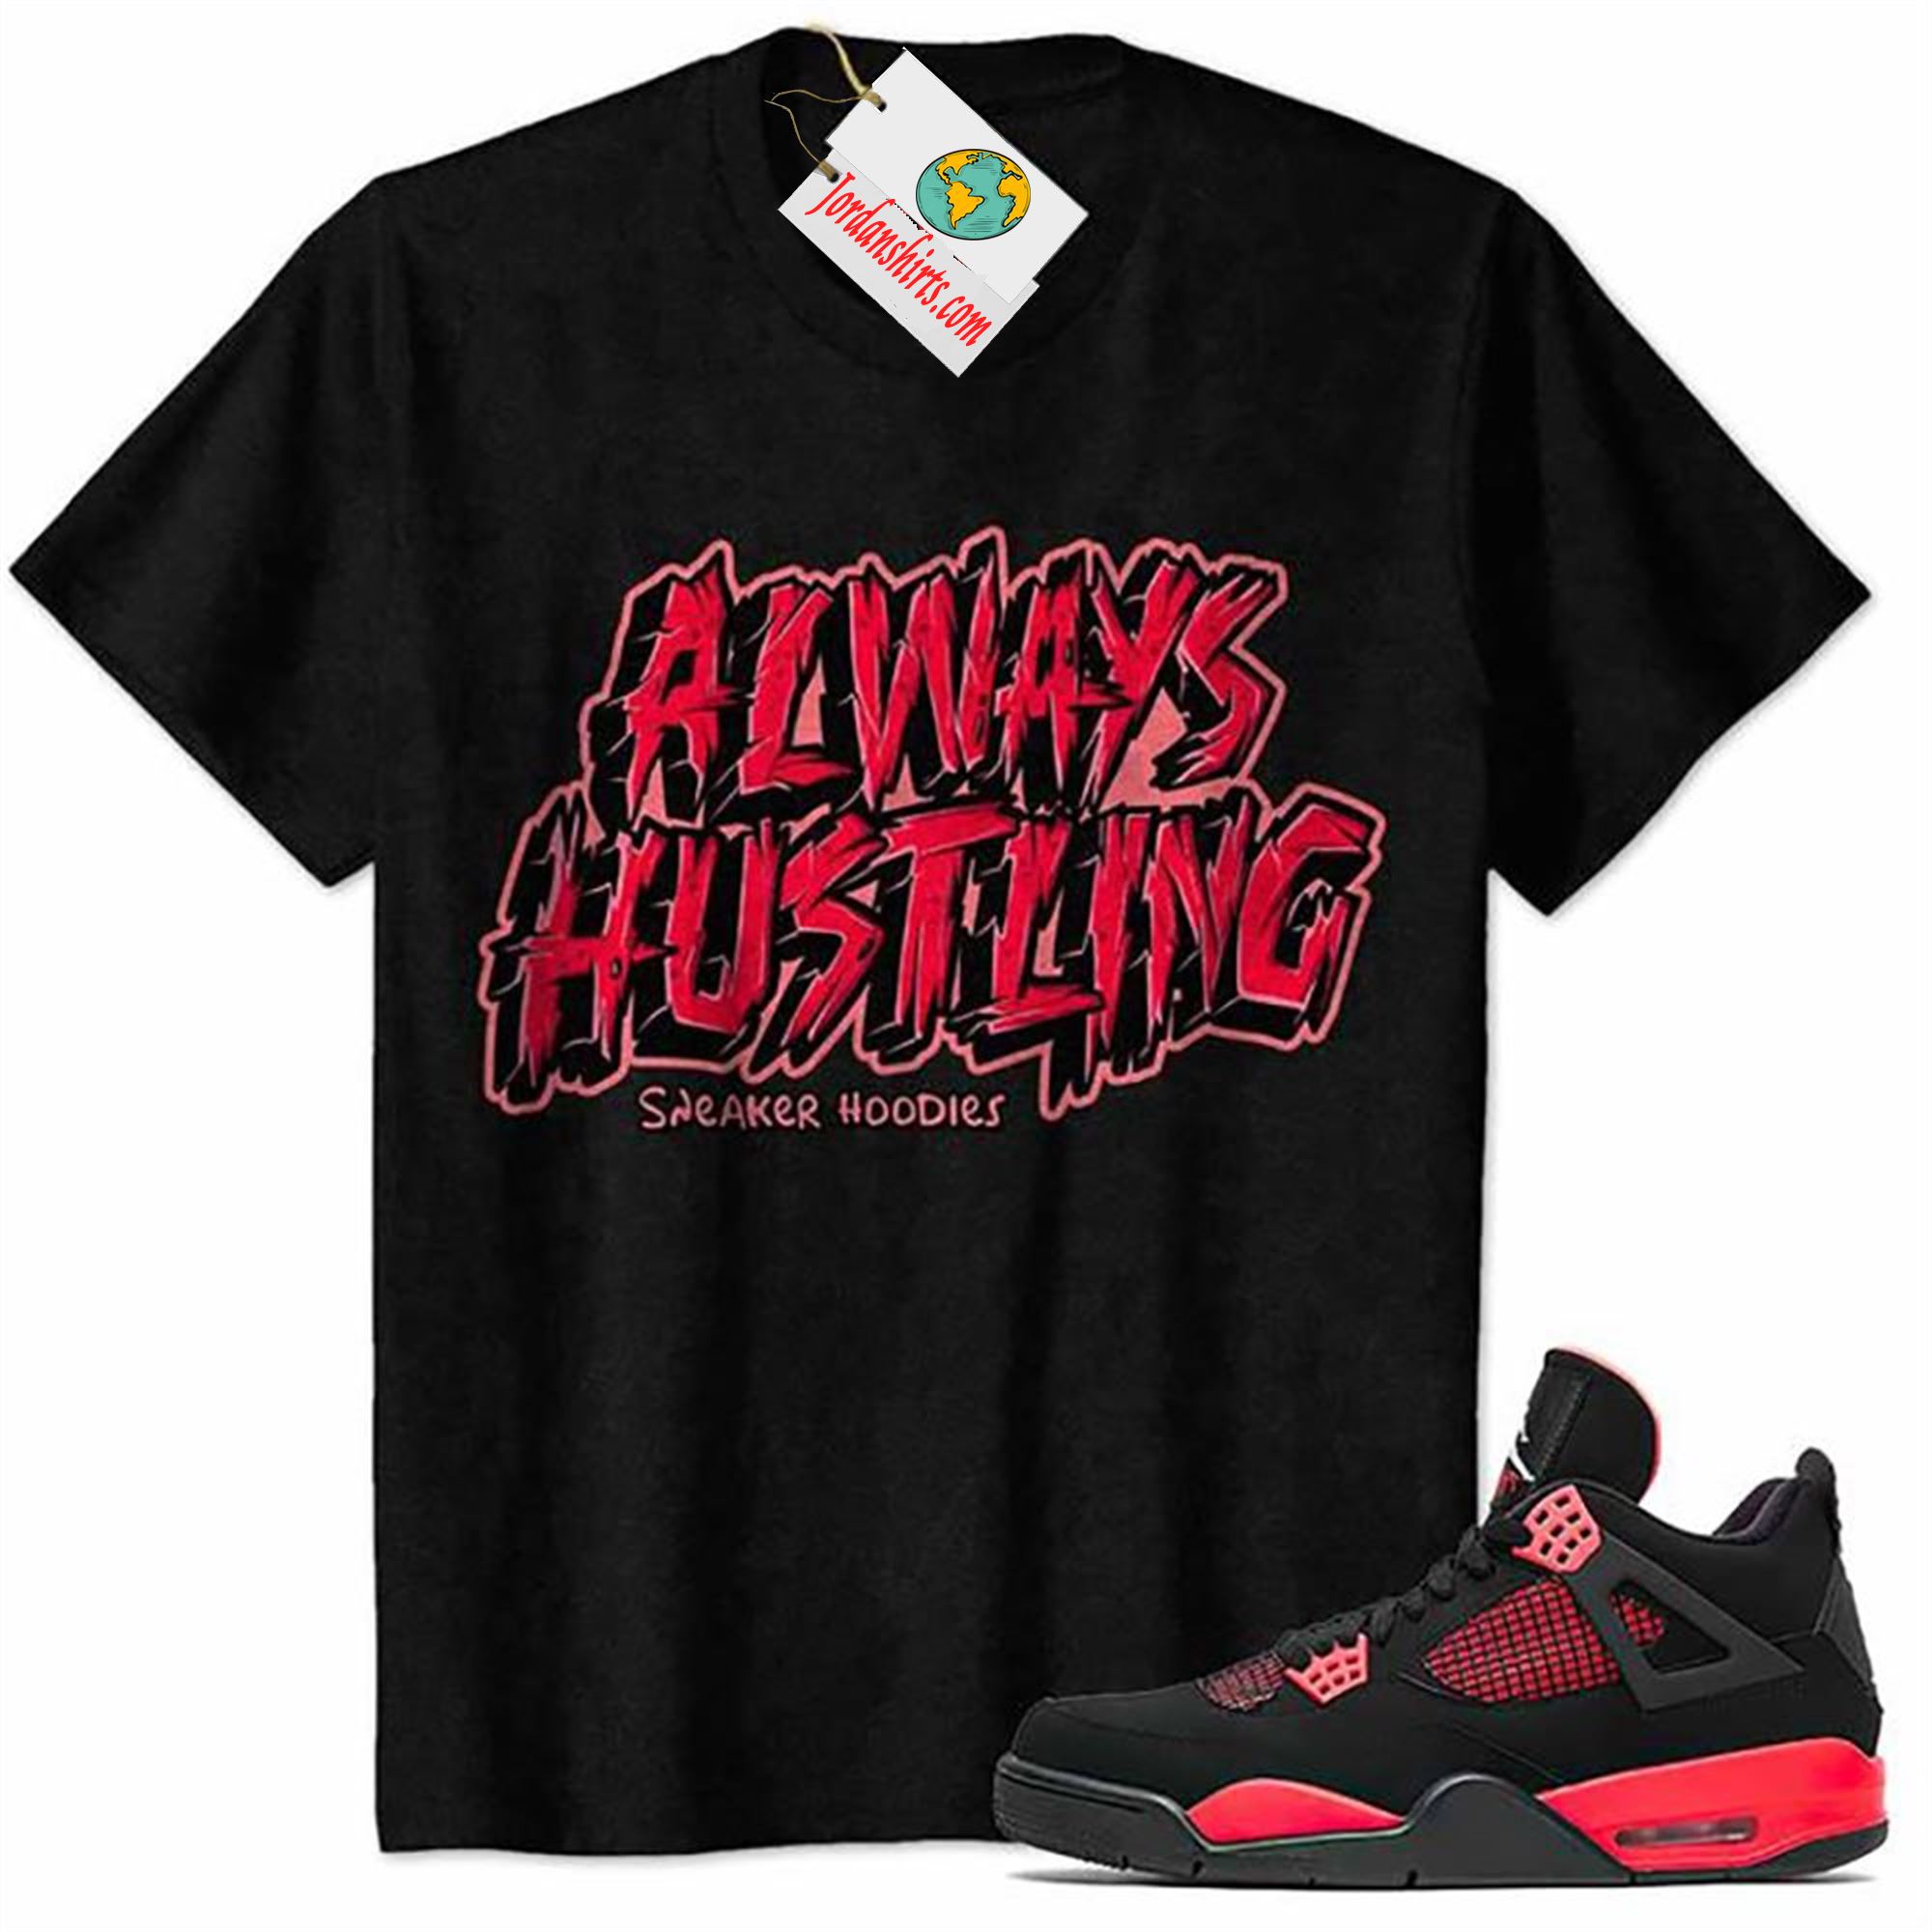 Jordan 4 Shirt, Allway Hustling Hustle Black Air Jordan 4 Red Thunder 4s Plus Size Up To 5xl